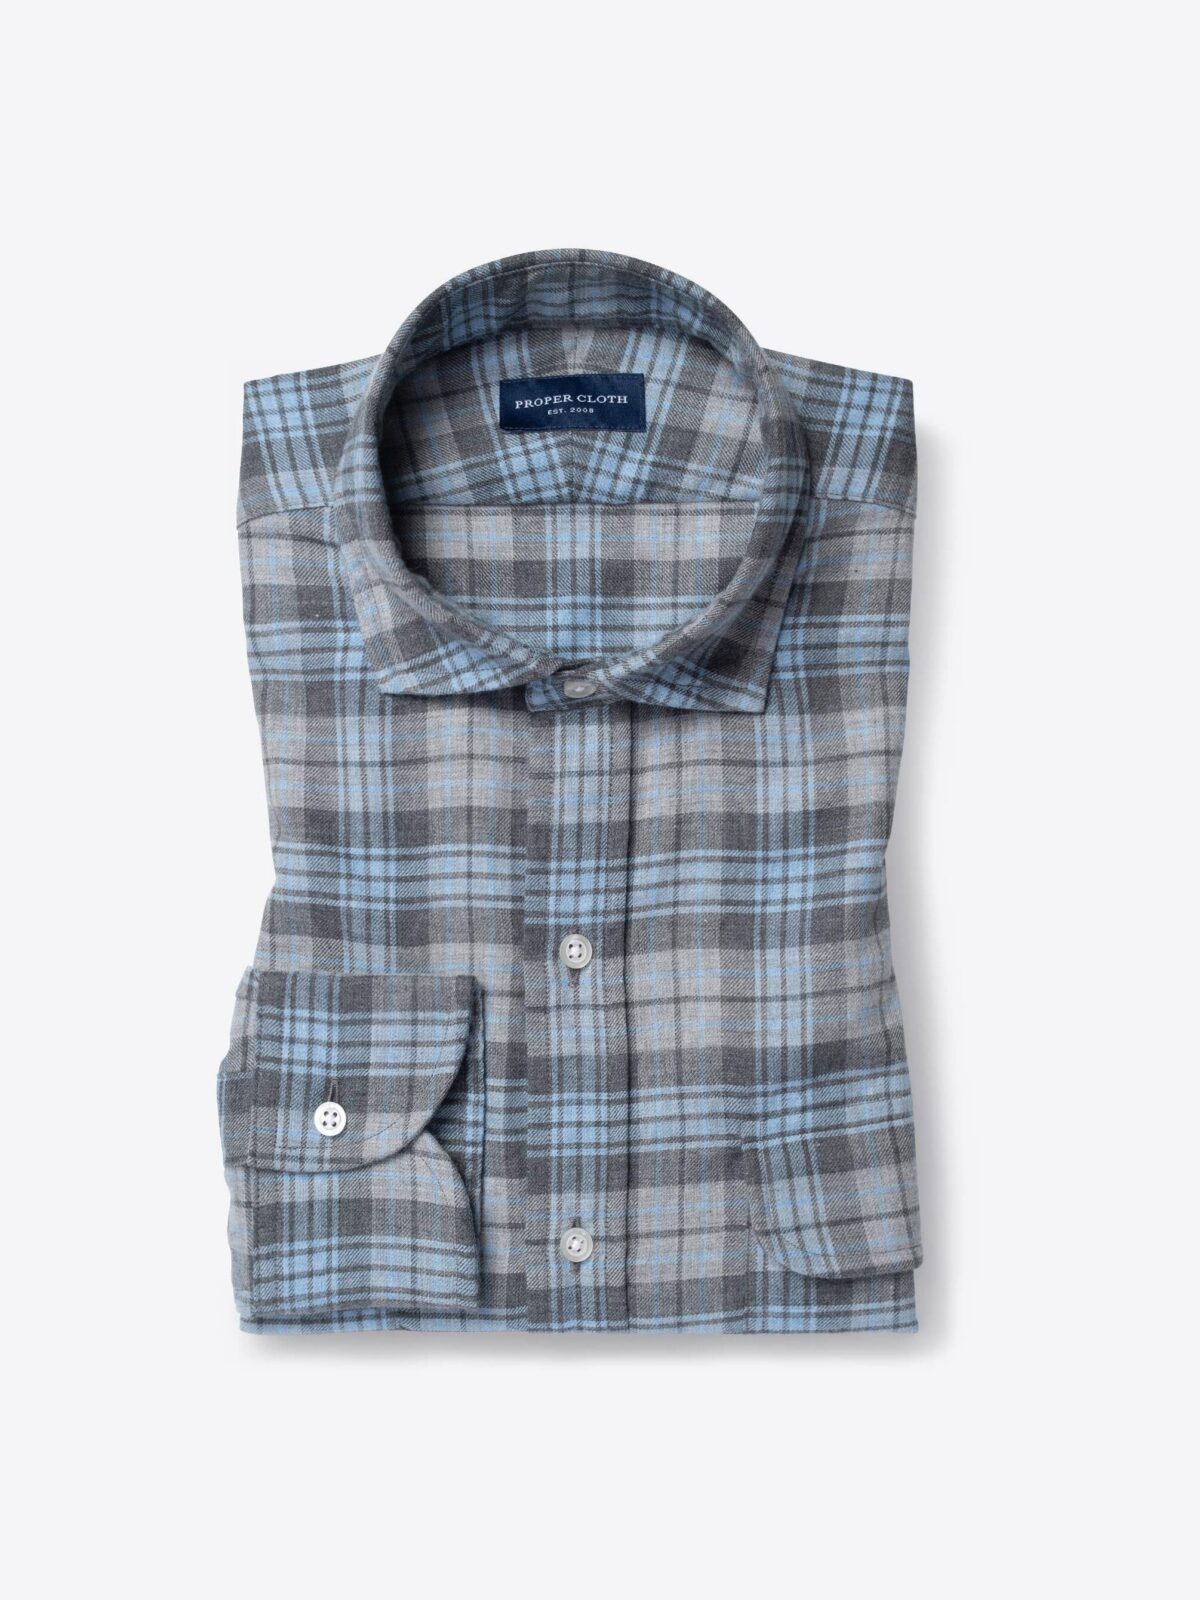 Satoyama Light Blue and Grey Plaid Flannel Shirt by Proper Cloth